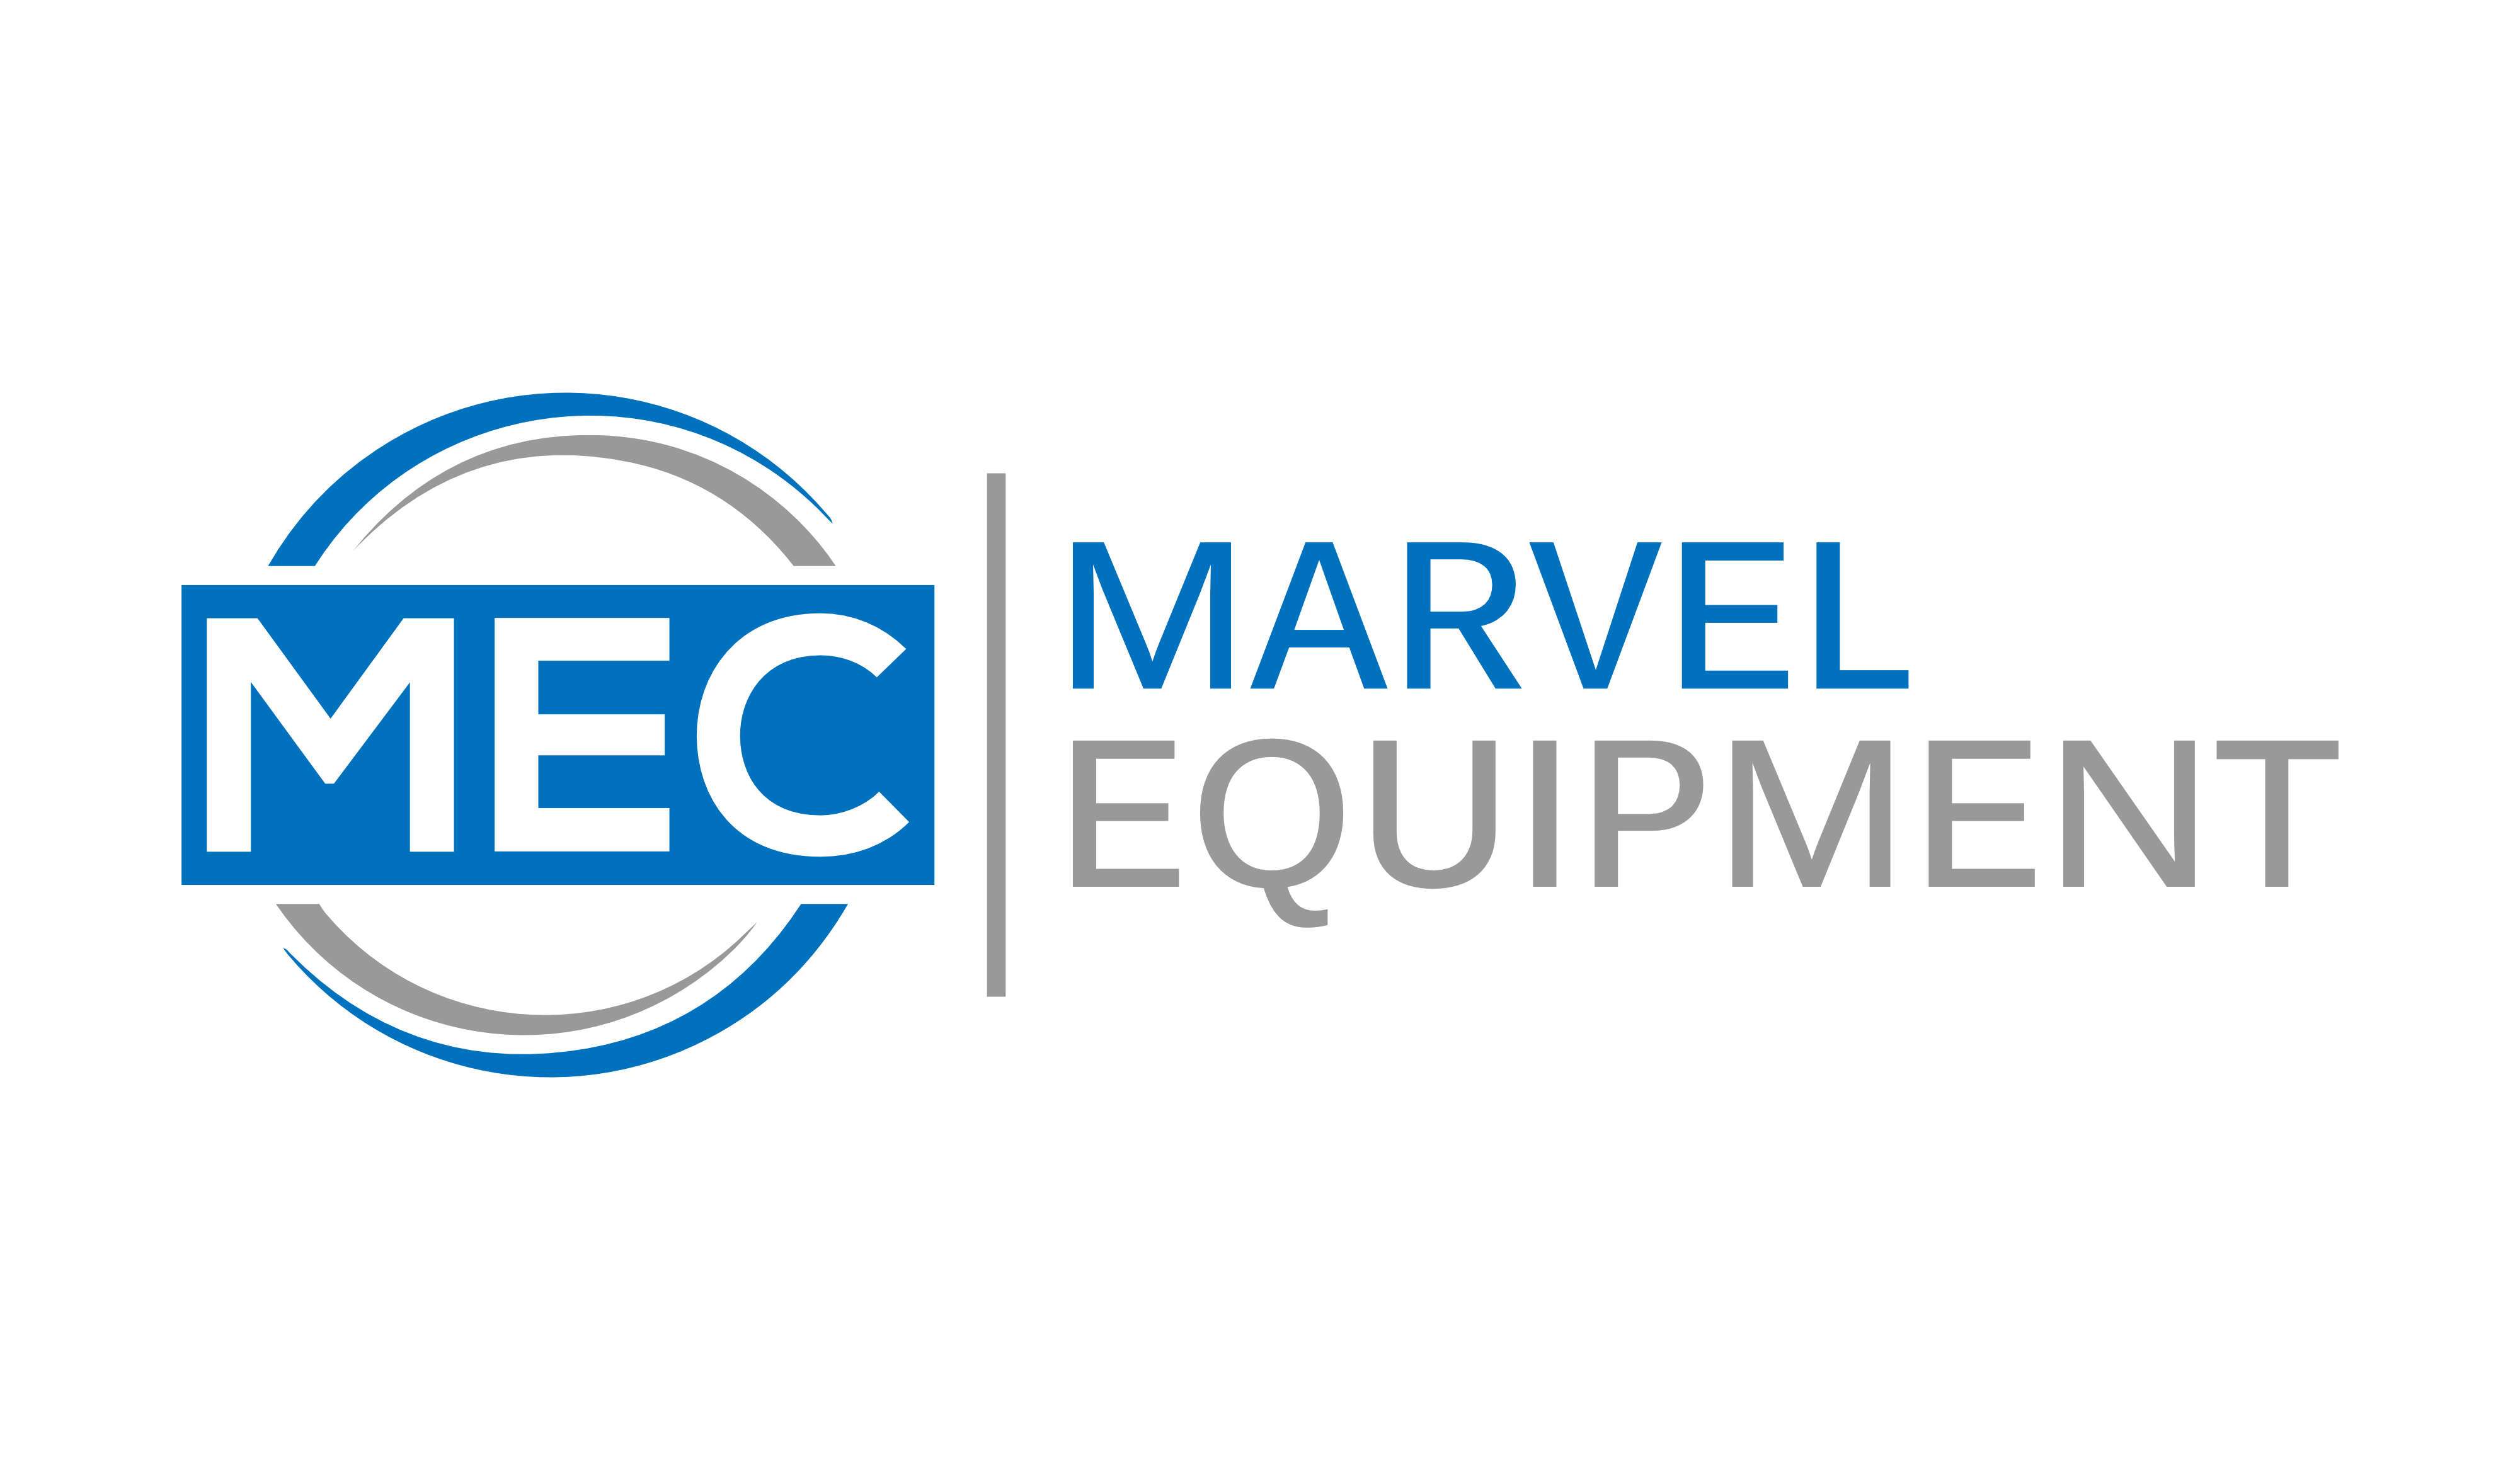 Marvel Equipment Corp.